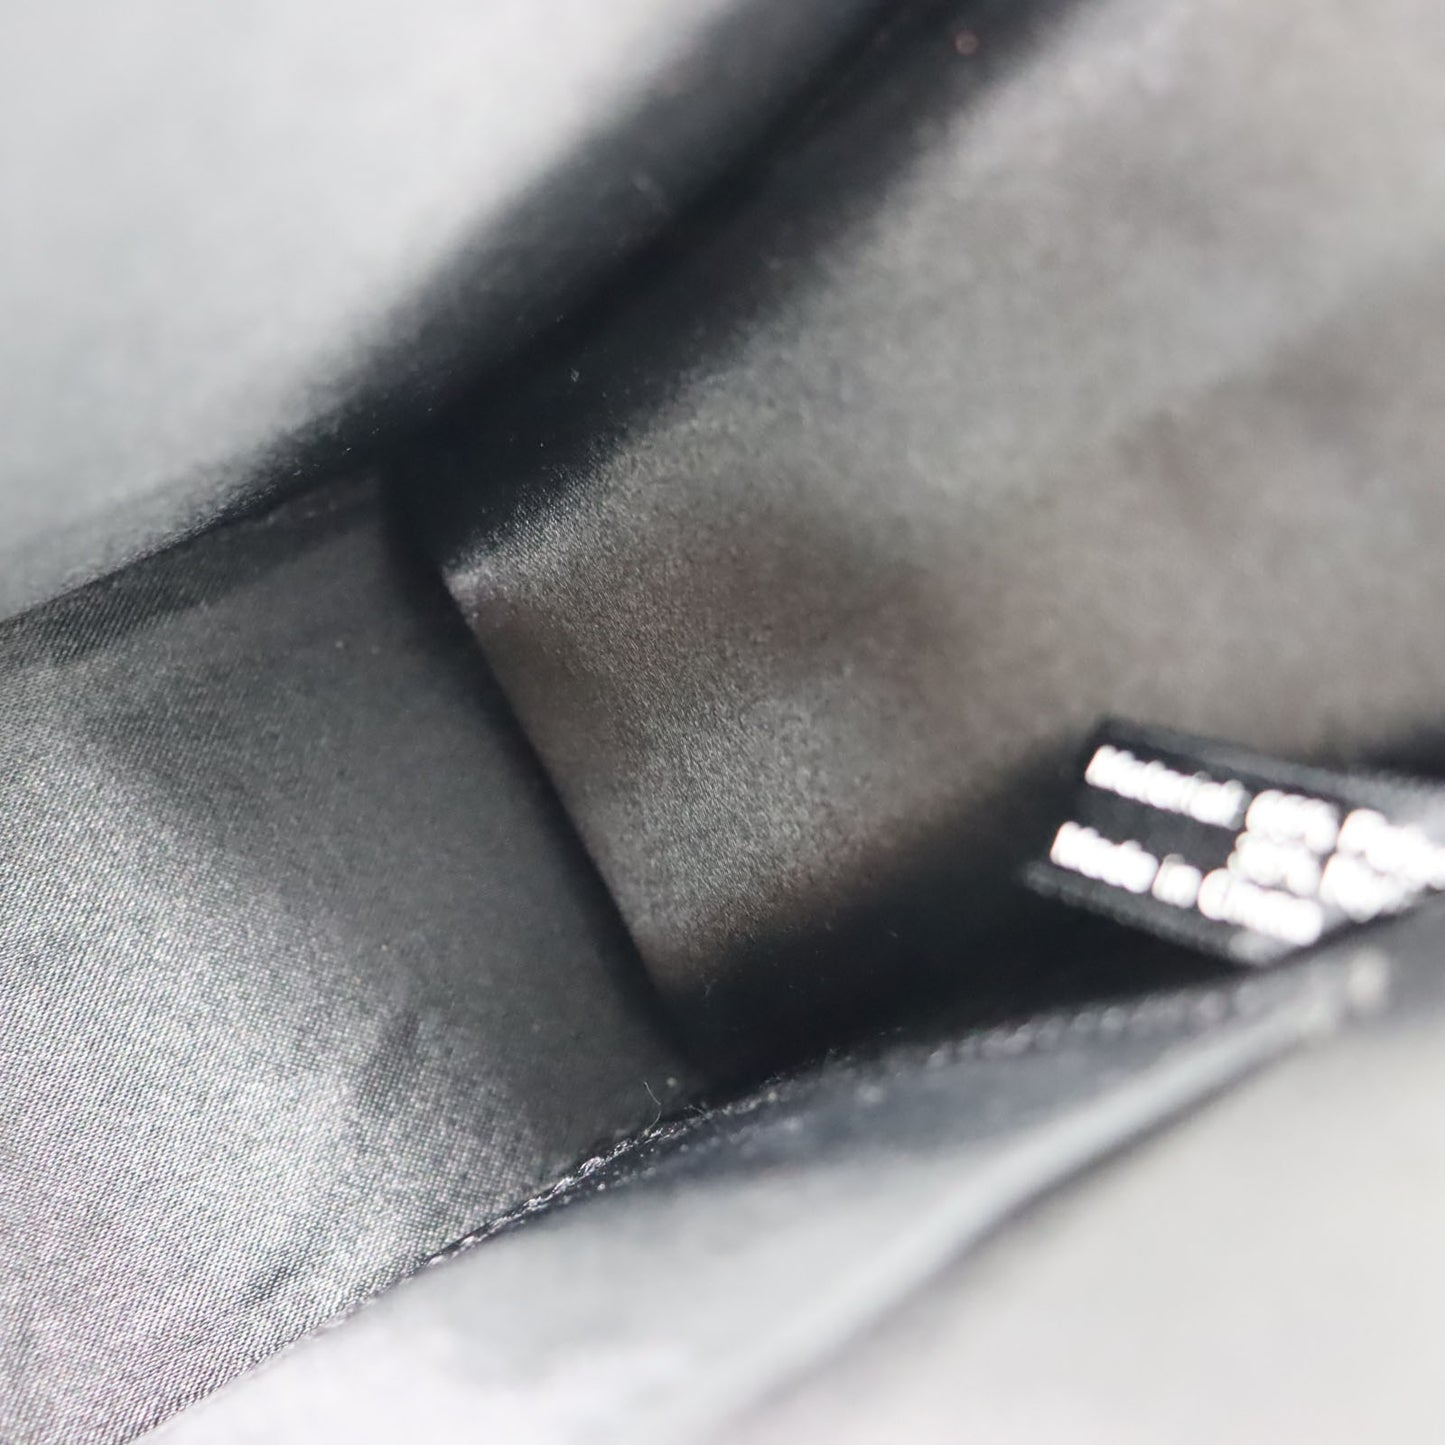 GIVENCHY Handbag Black Glitter Polyester Nylon Beads #AH313